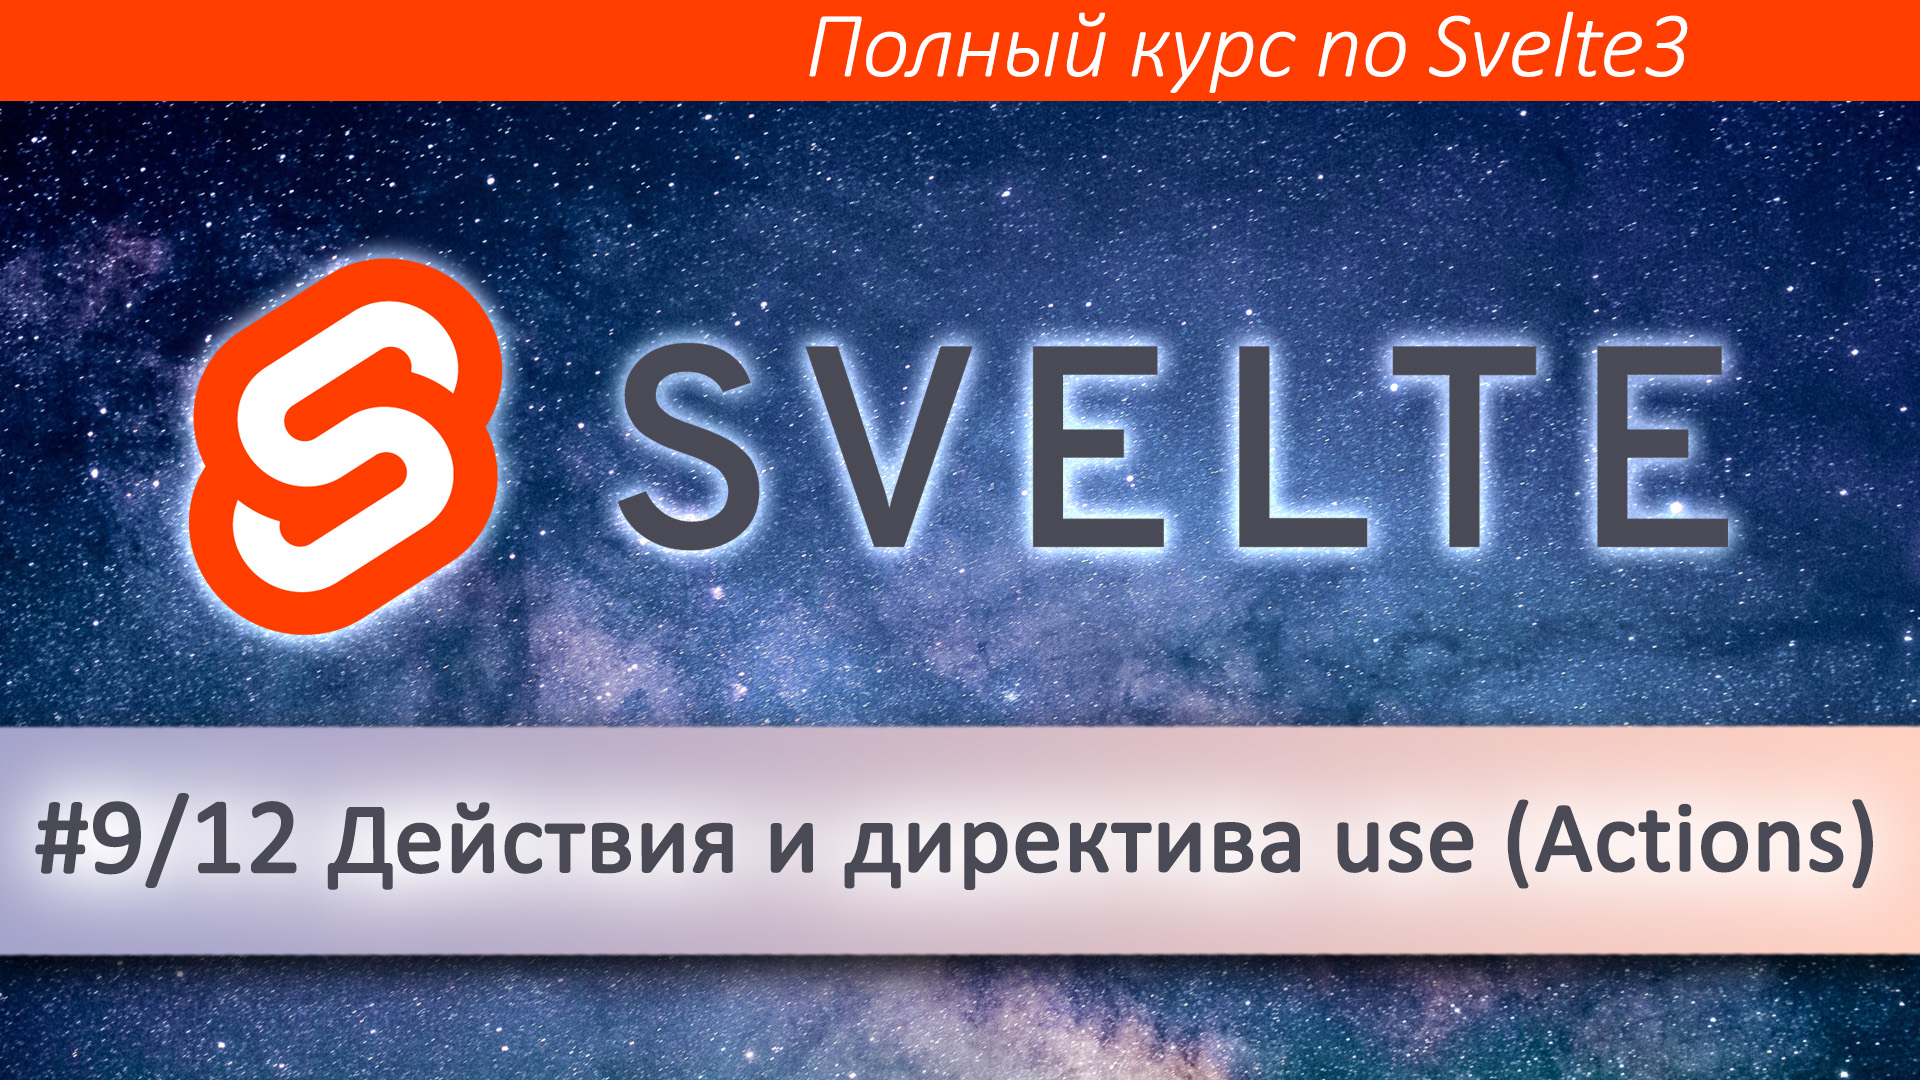 Svelte 9/12. Действия и директива use - Svelte Actions (Курс Svelte)